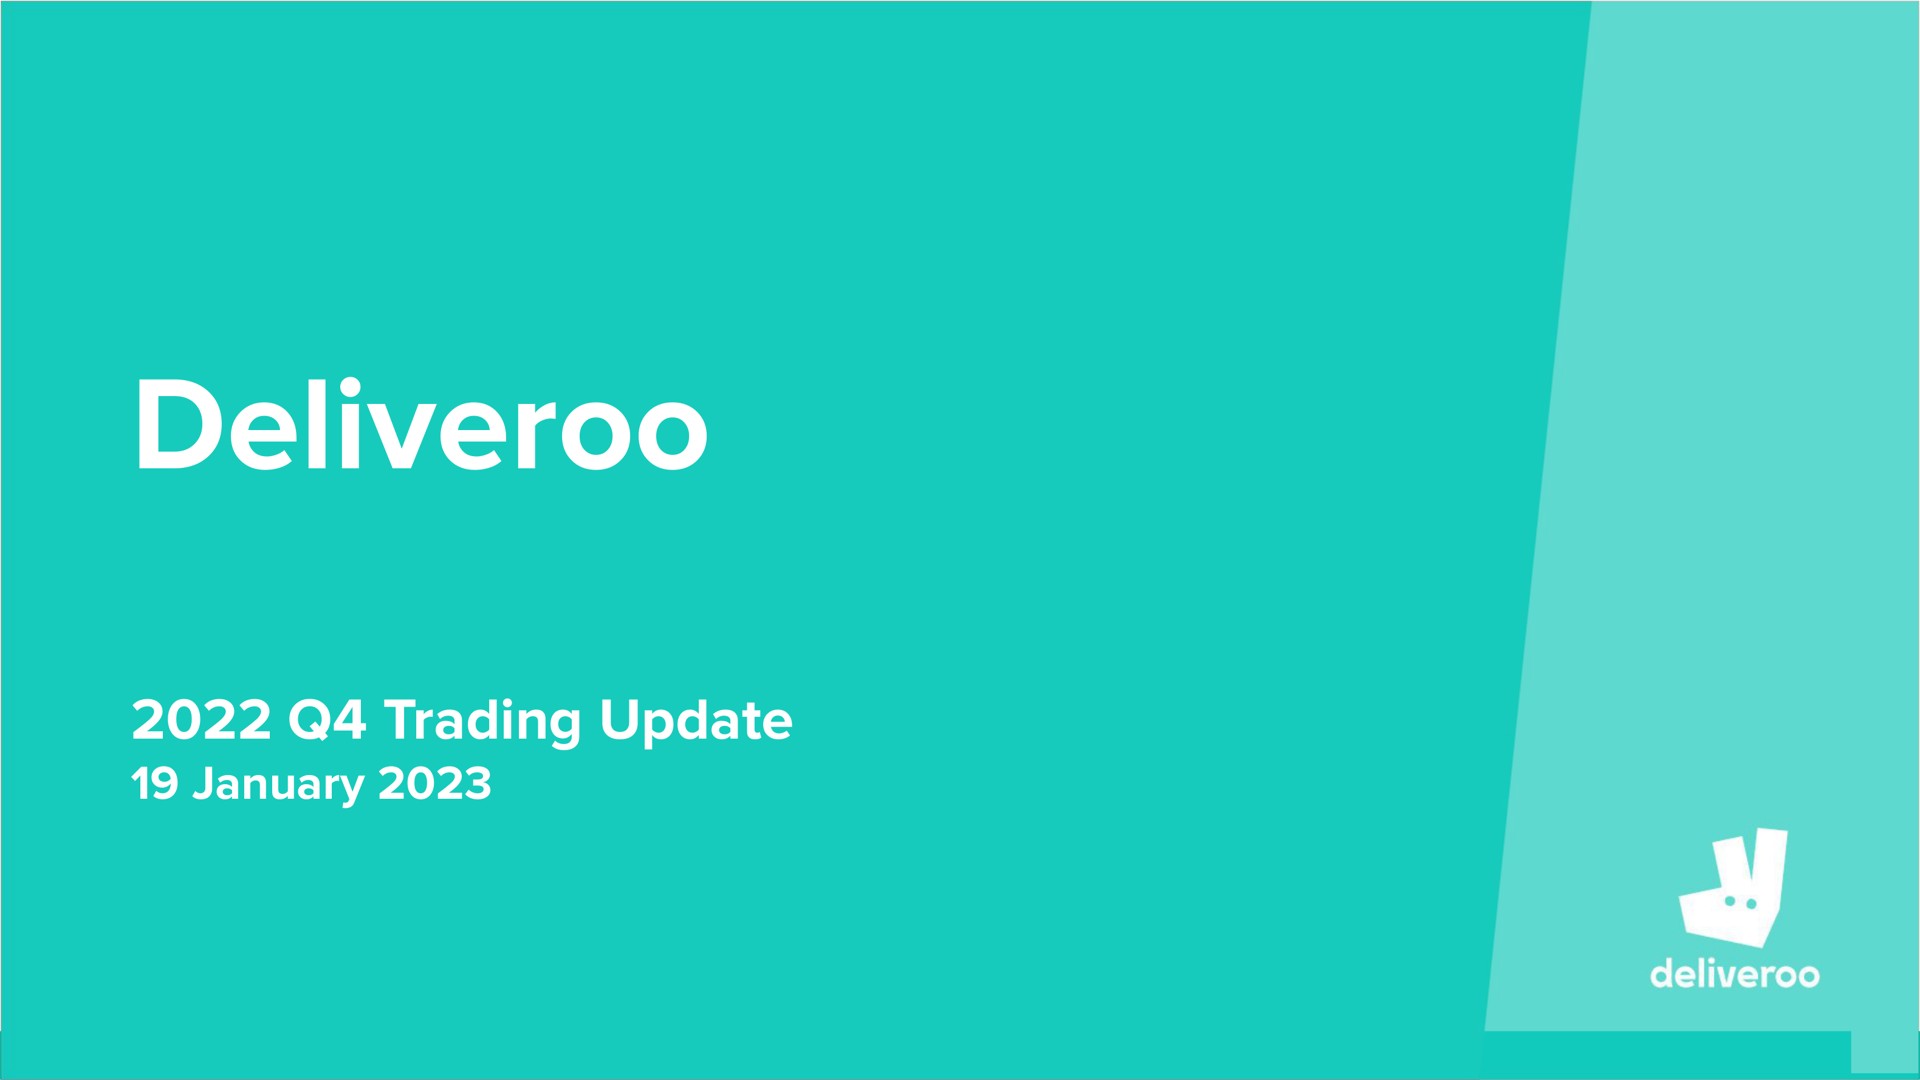 trading update | Deliveroo